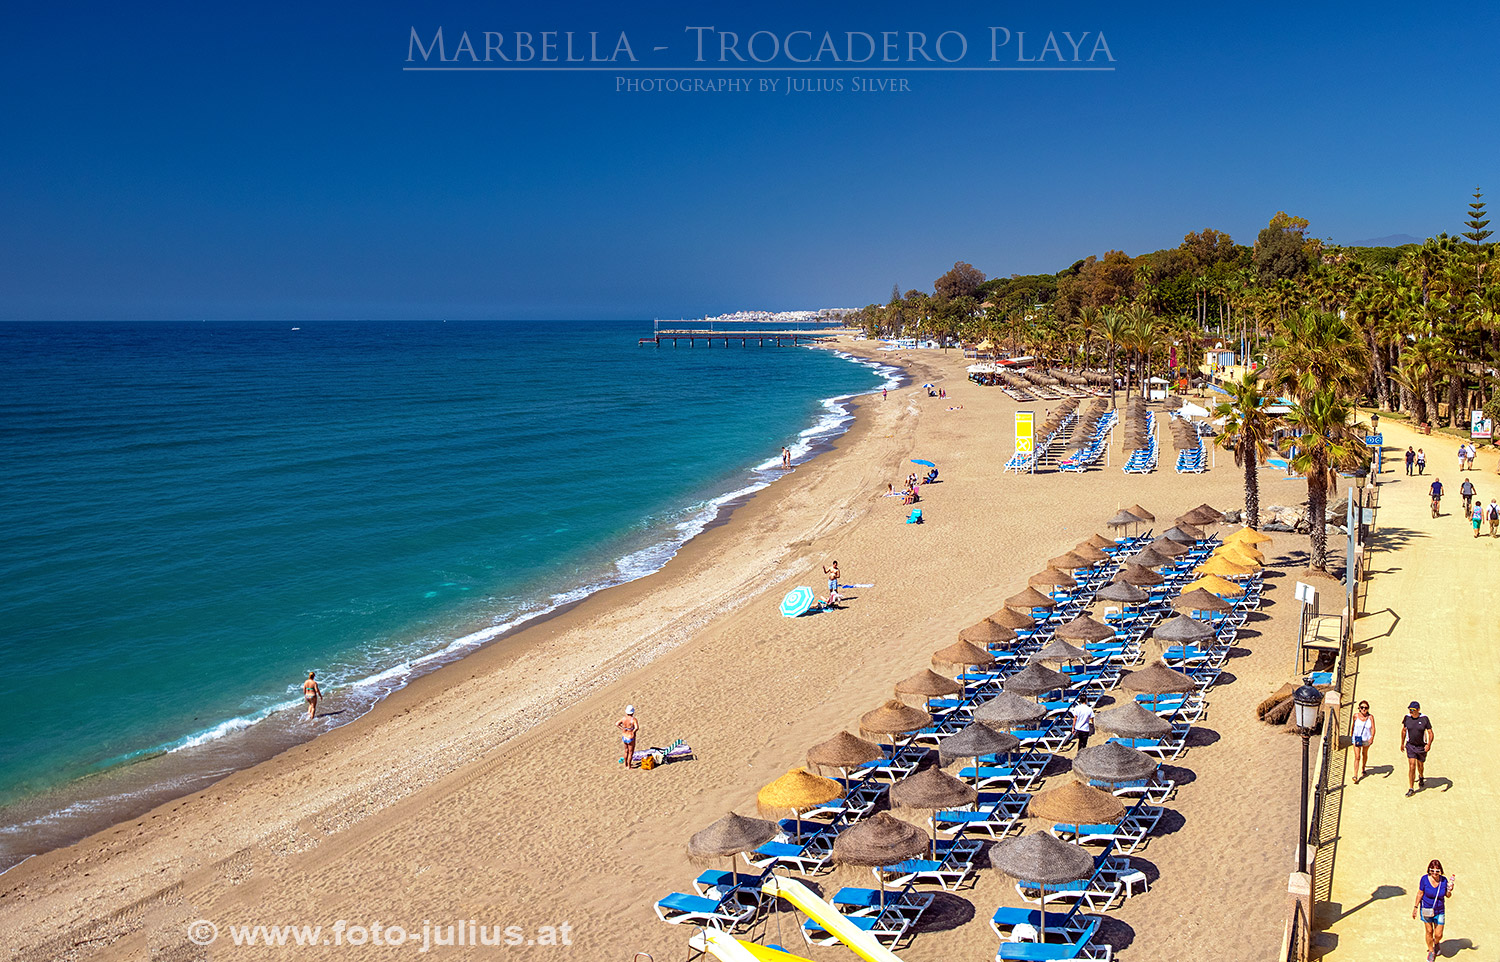 132a_Marbella_Trocadero_Playa.jpg, 581kB